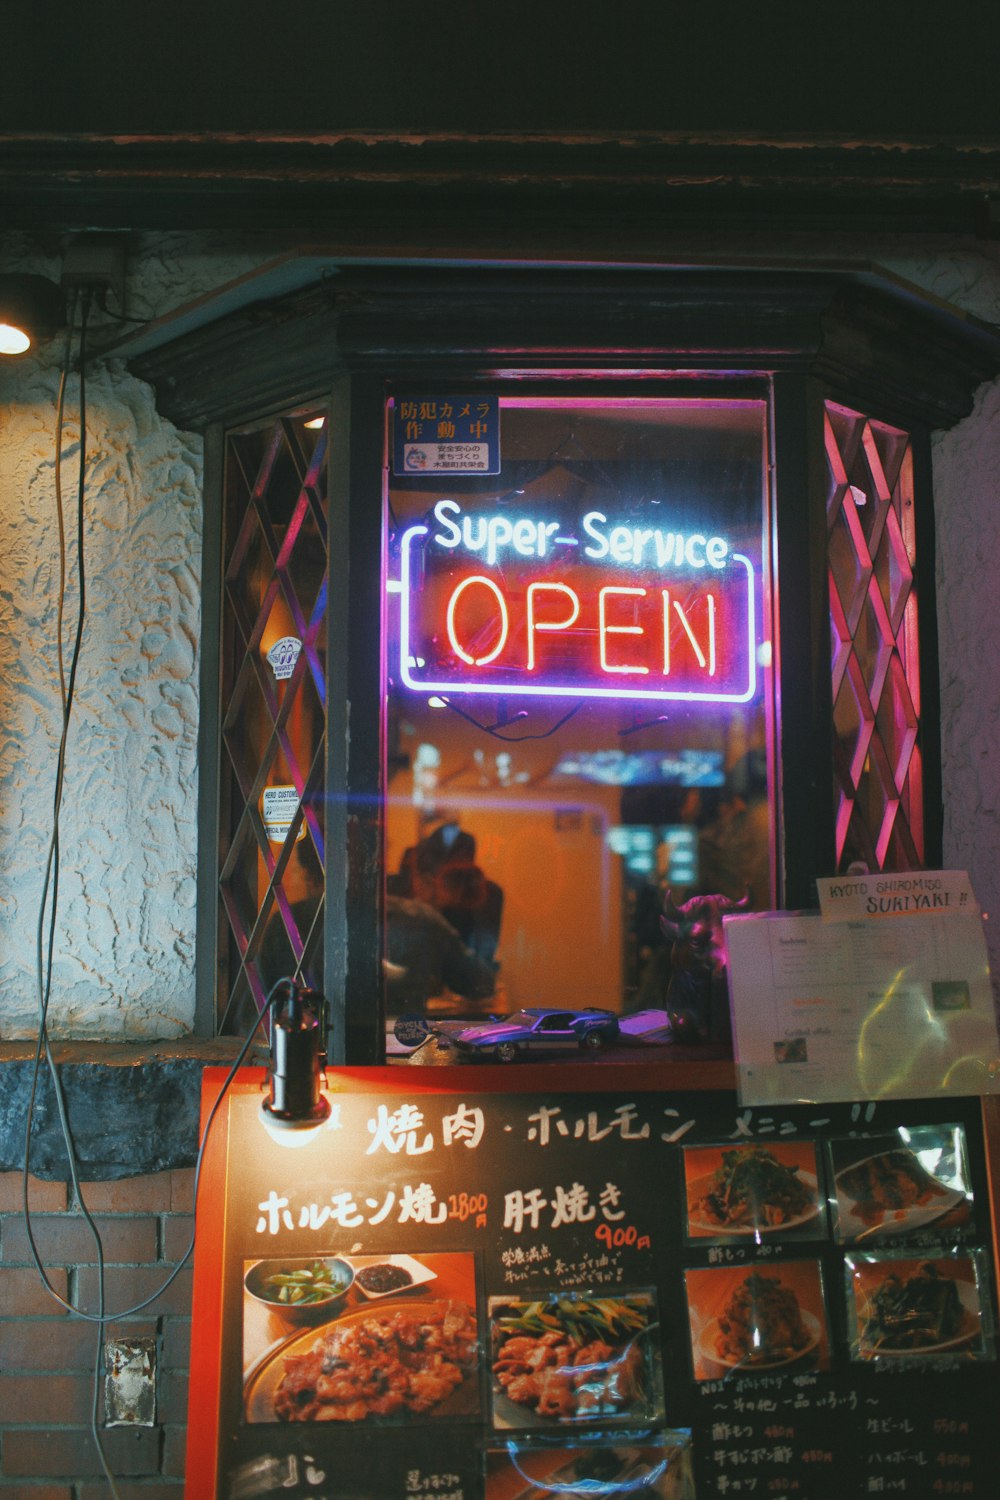 Super-Service open neon signage hanged on window